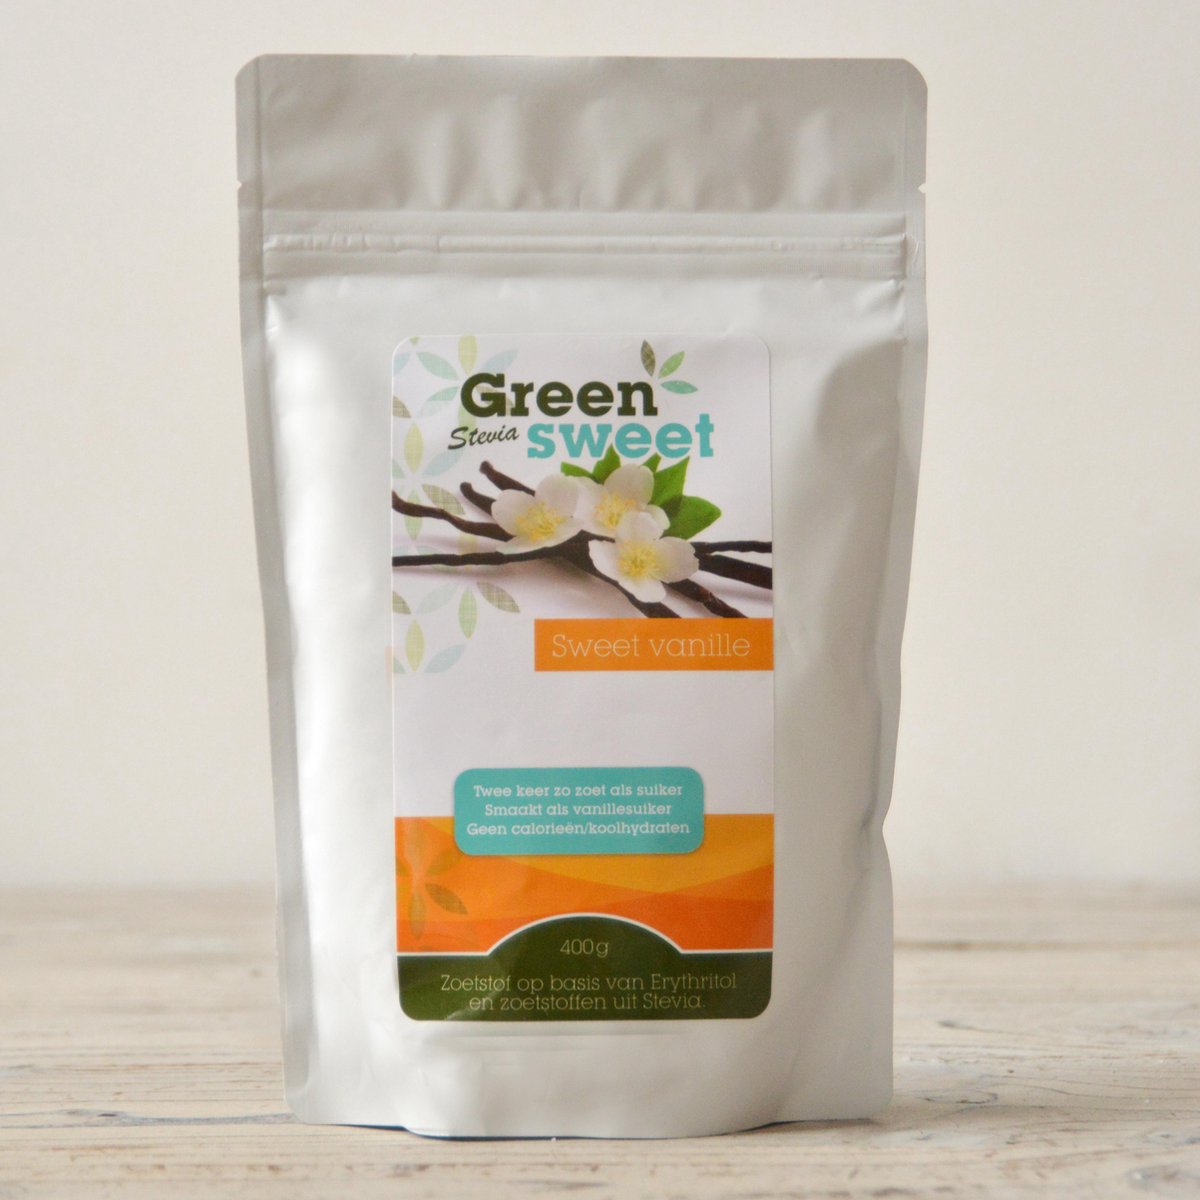 Greensweet Stevia Sweet Vanilla Sugar